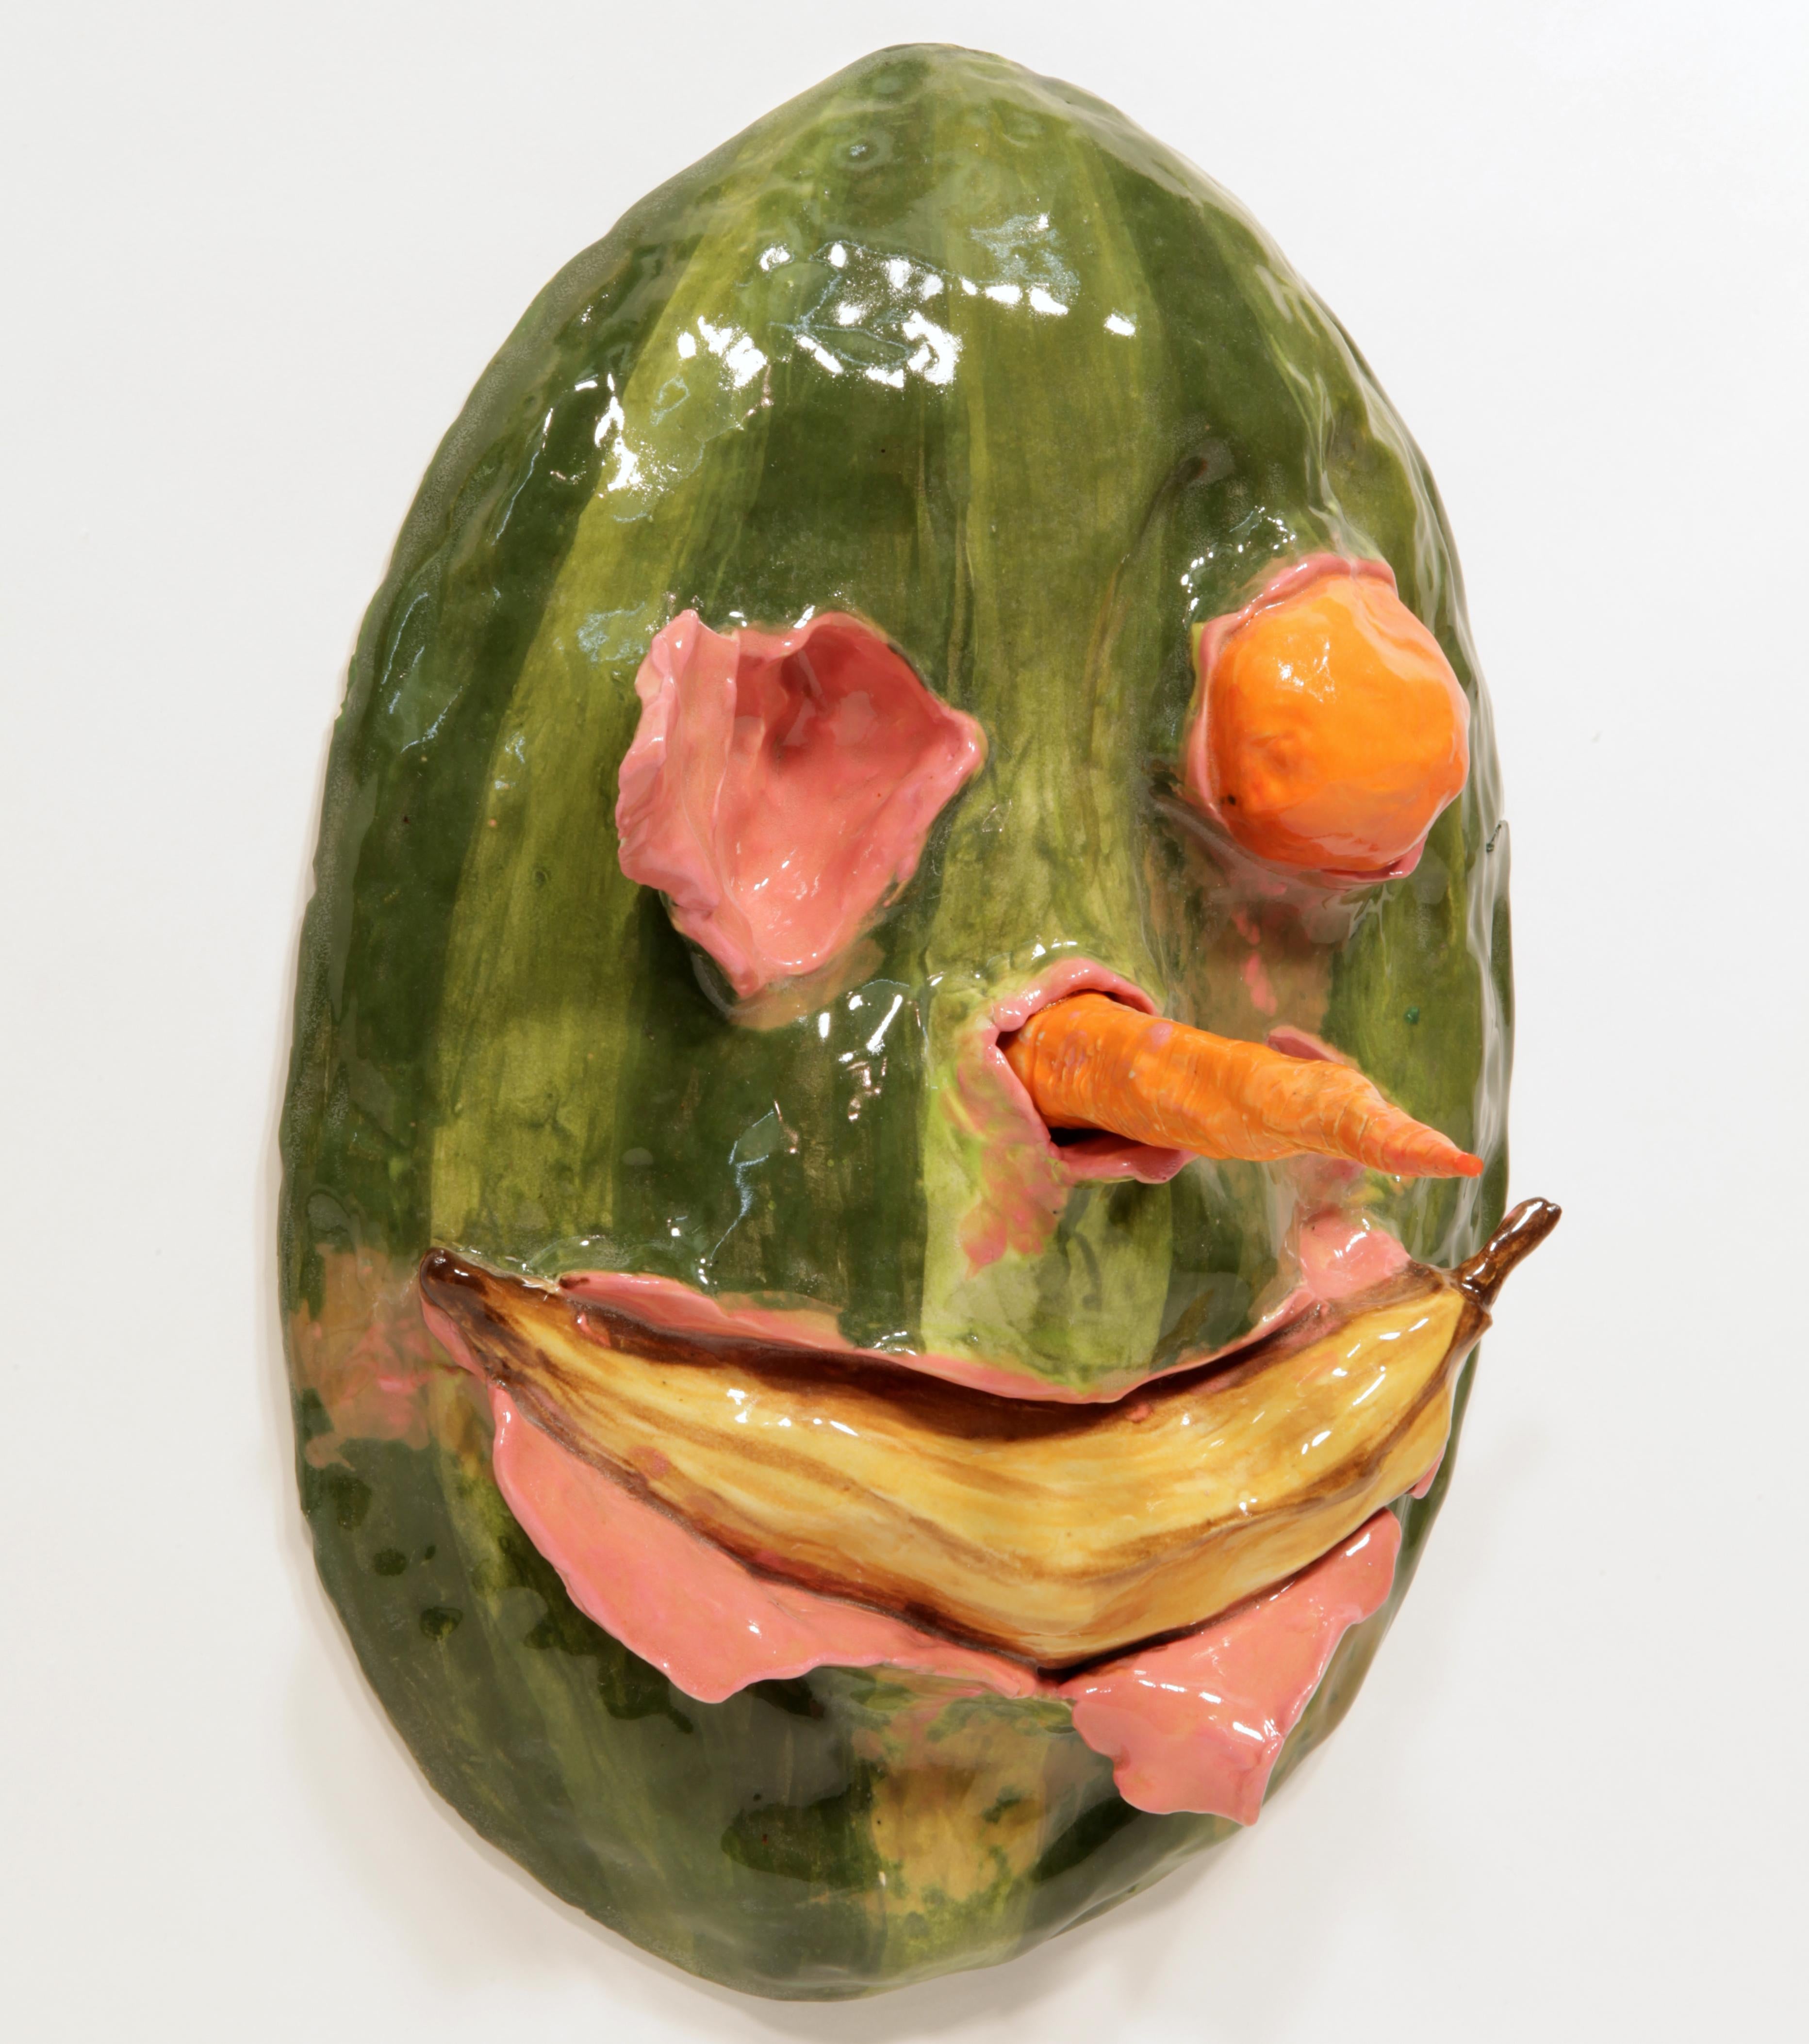 Watermelon Head with Banana Smile